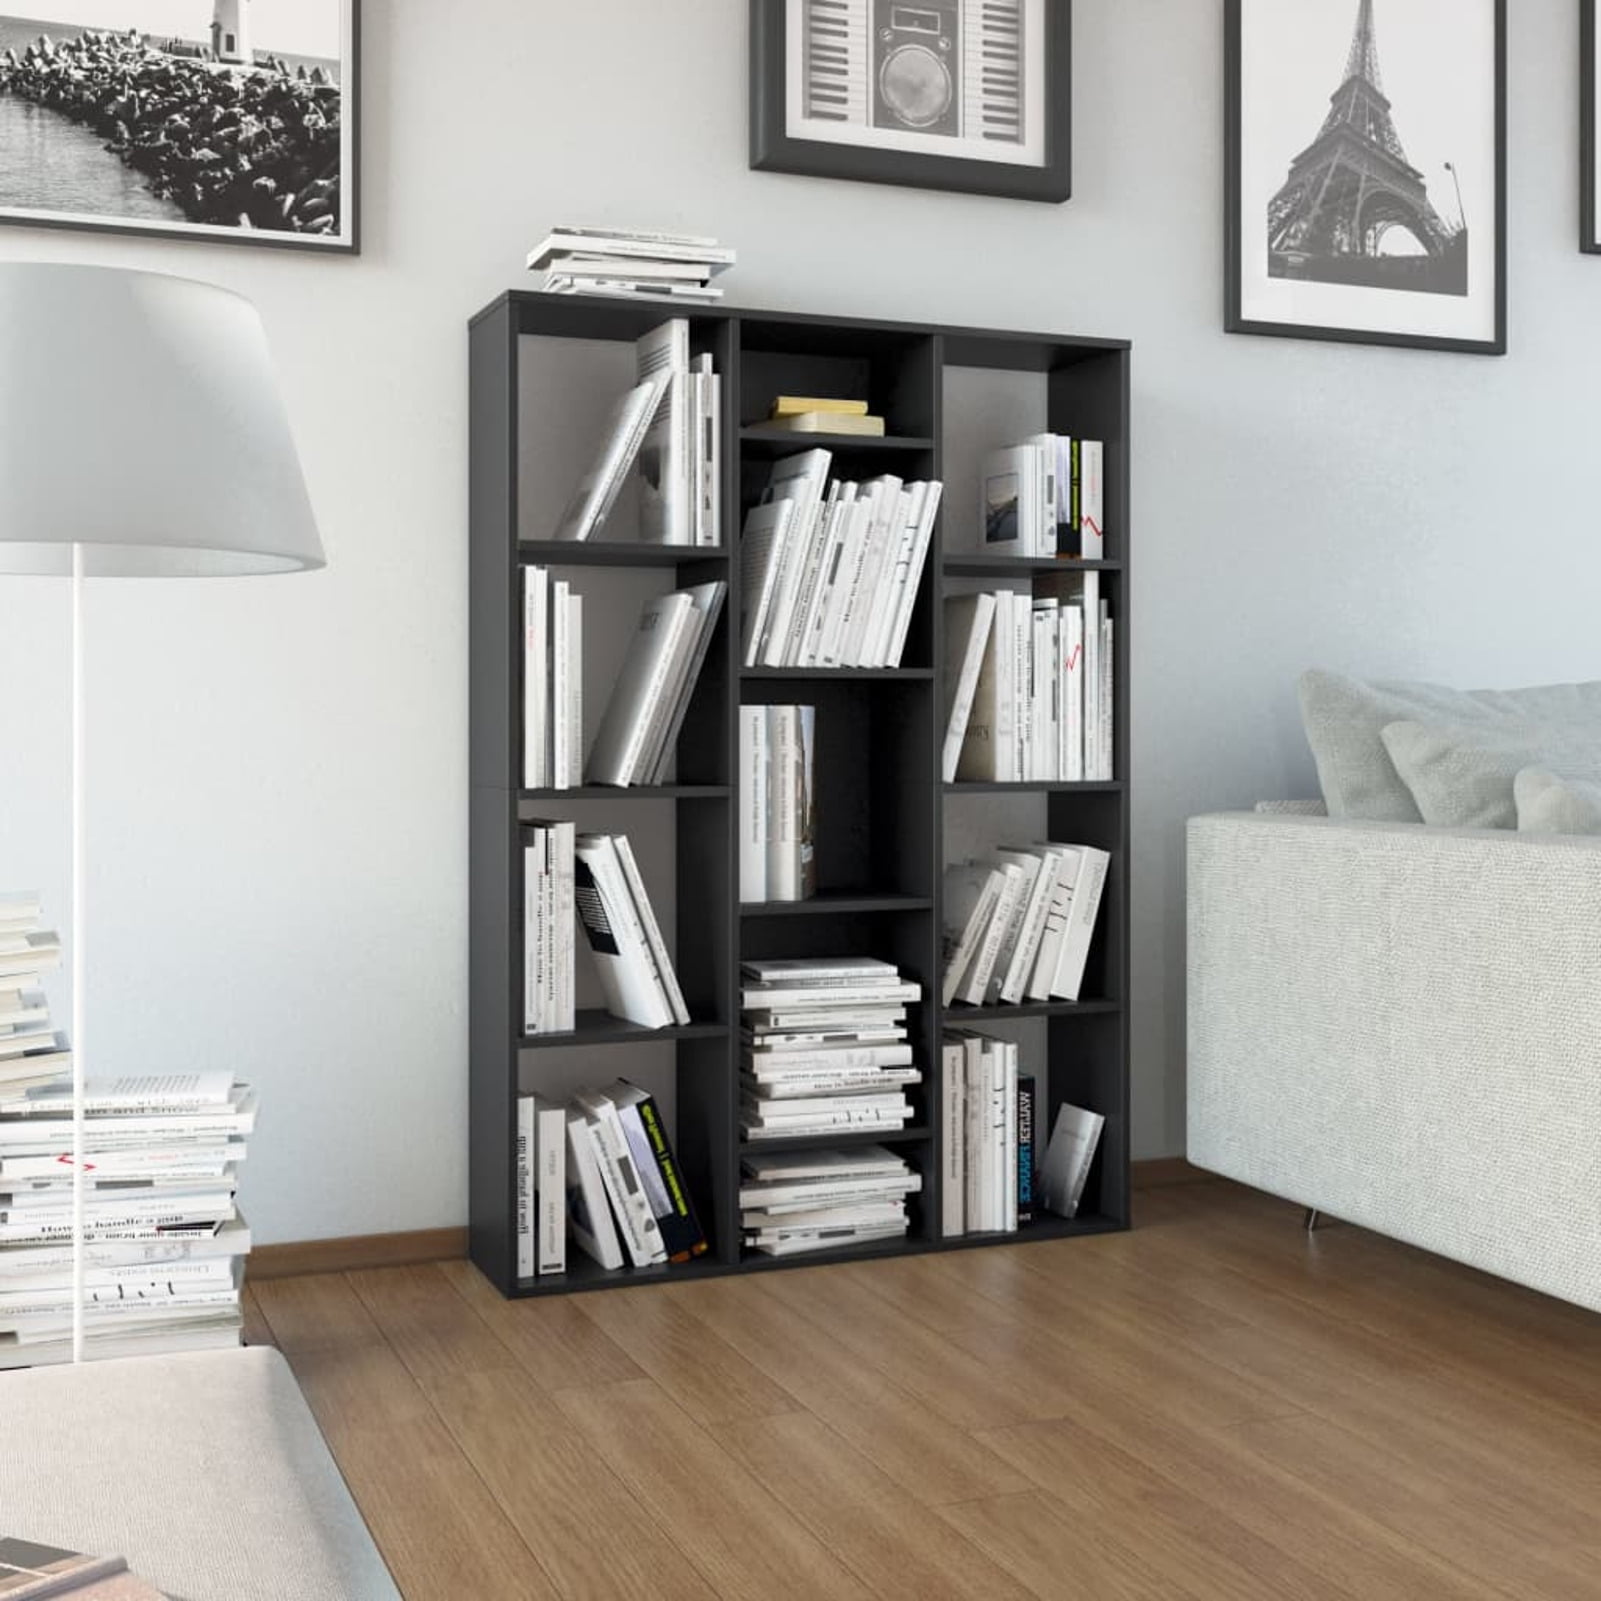 Details about   Room Divider Book Shelf Rack Storage Organizer Book Cabinet Bookcase Display 